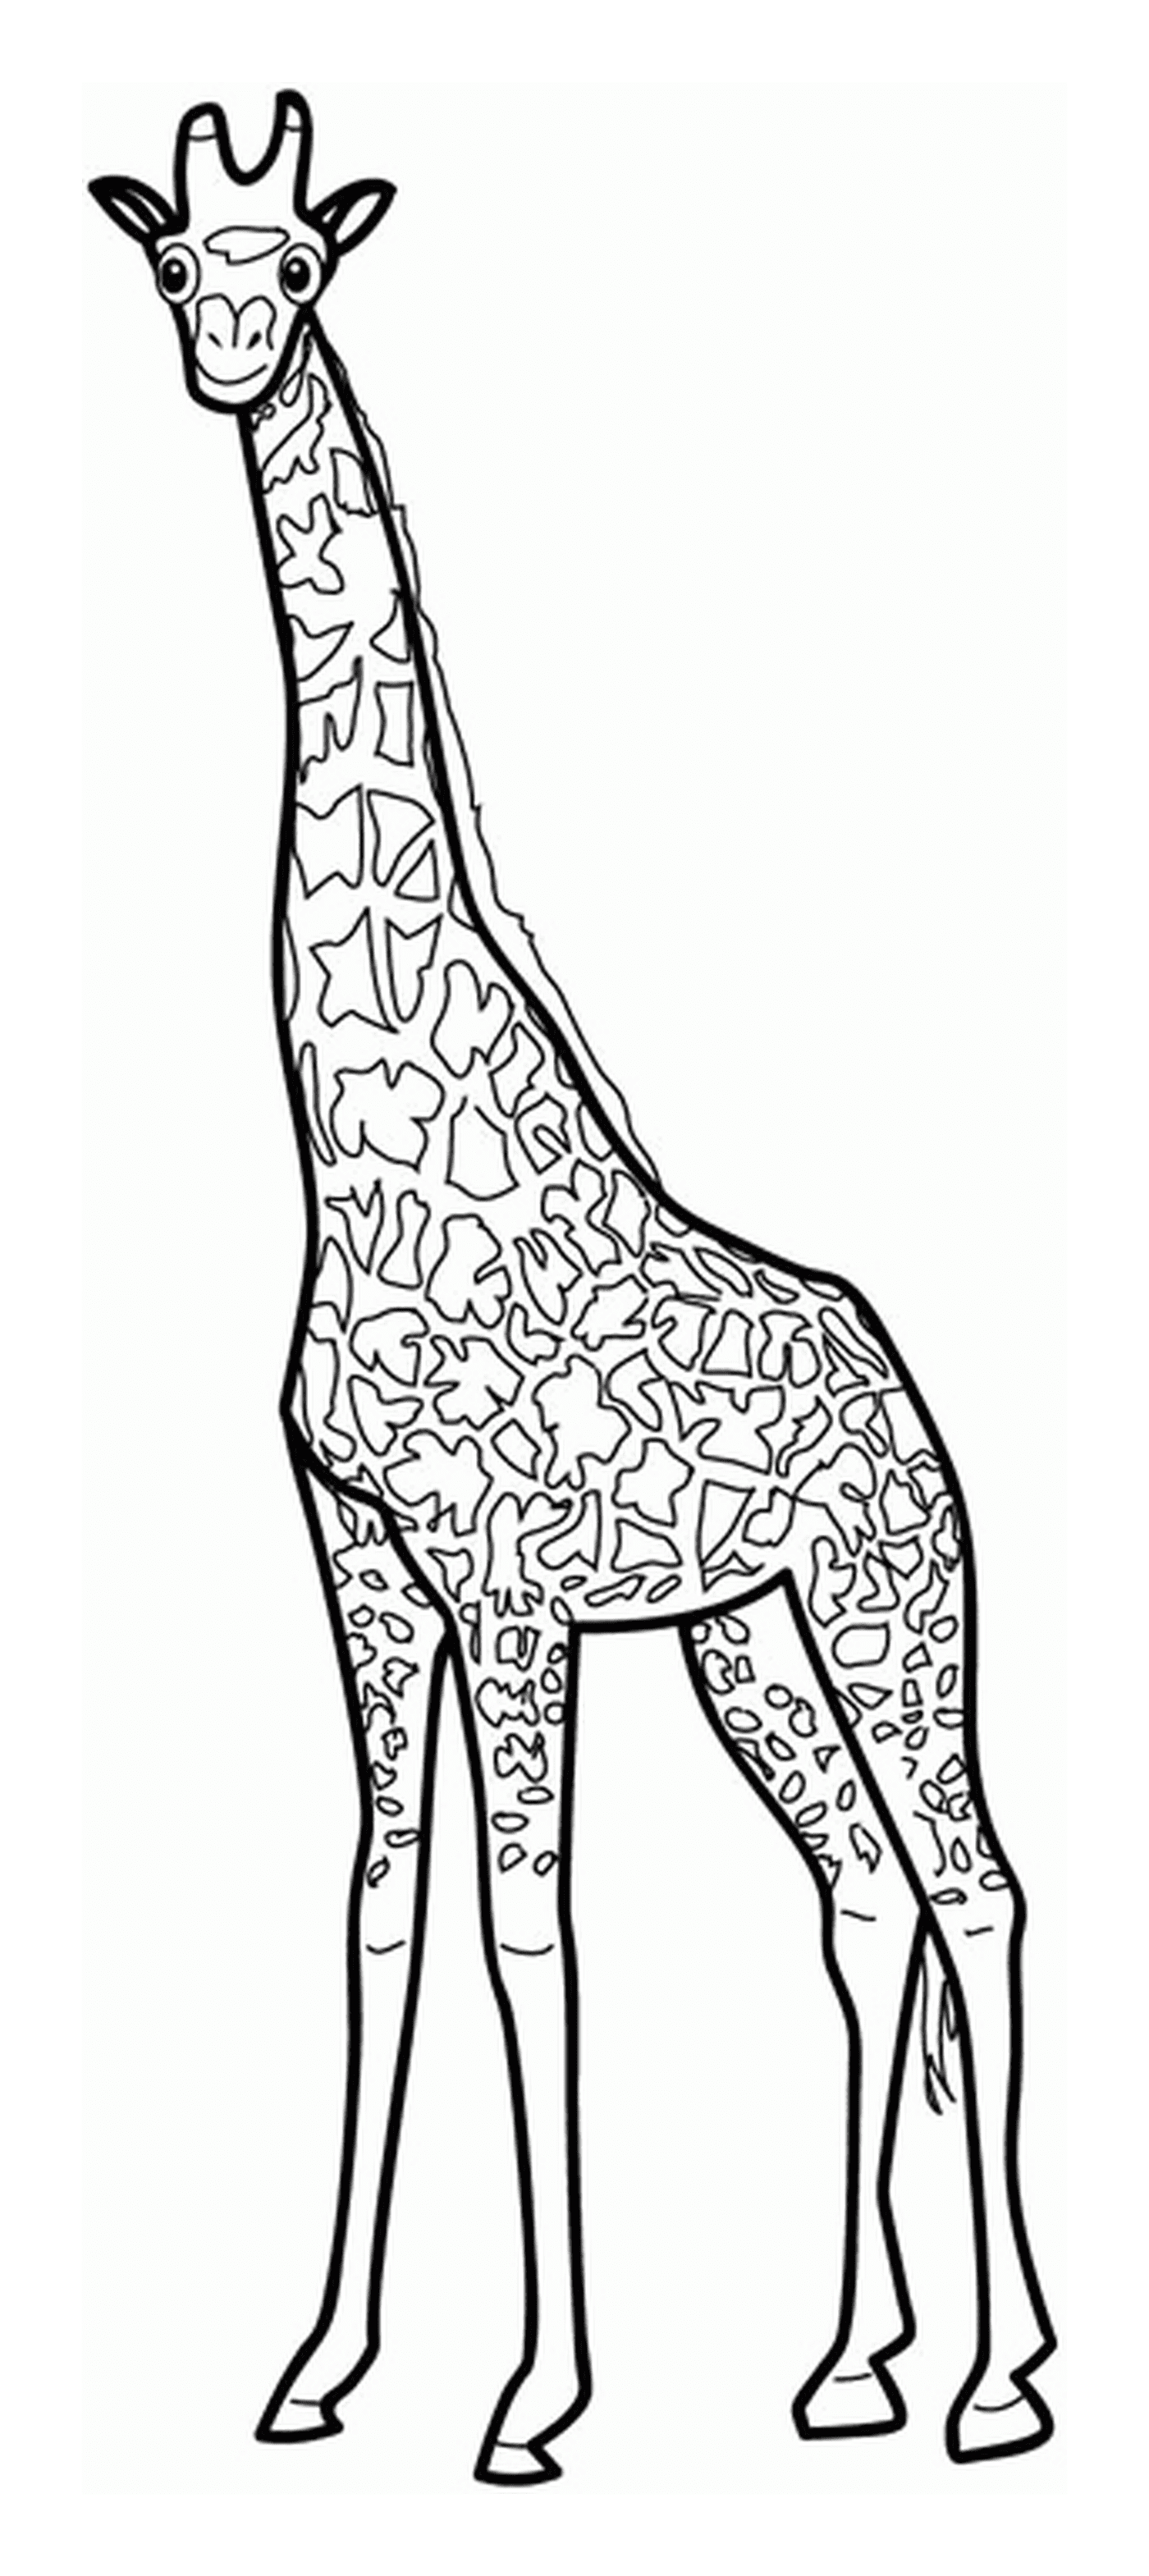  A giraffe 